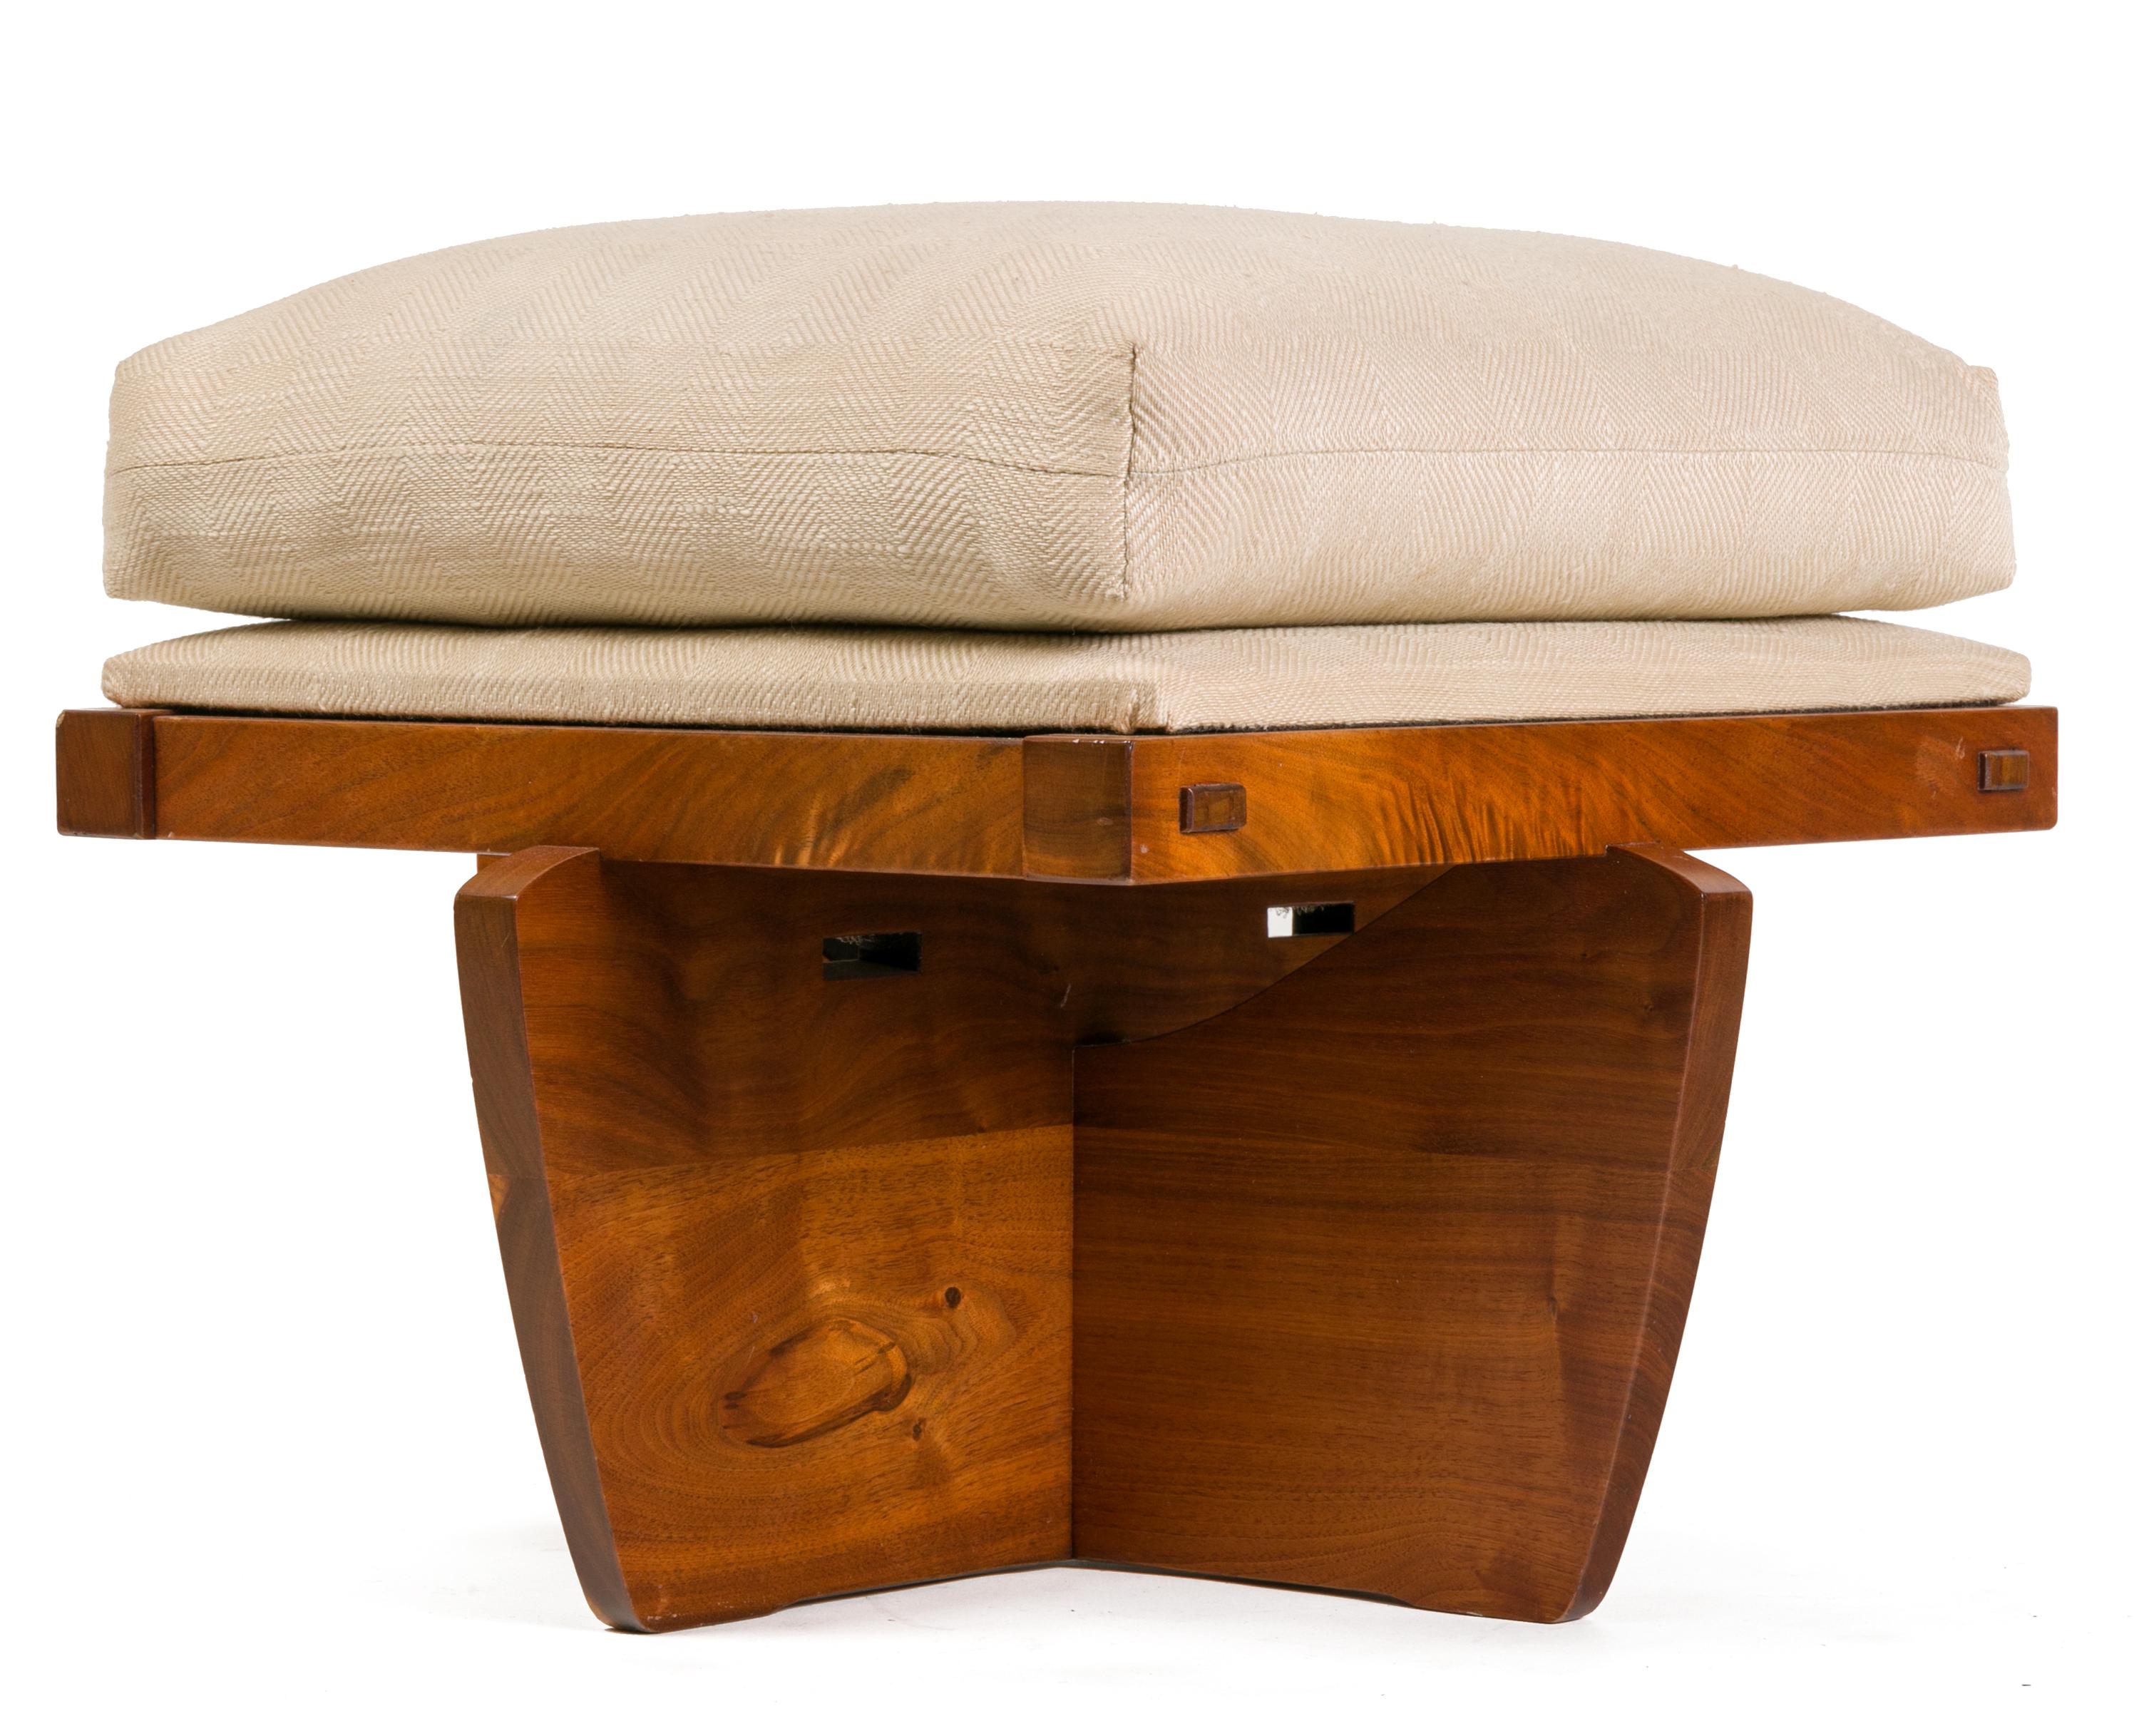 Rare and wonderful these ottoman/stools have Nakashima's very distinctive Conoid base.